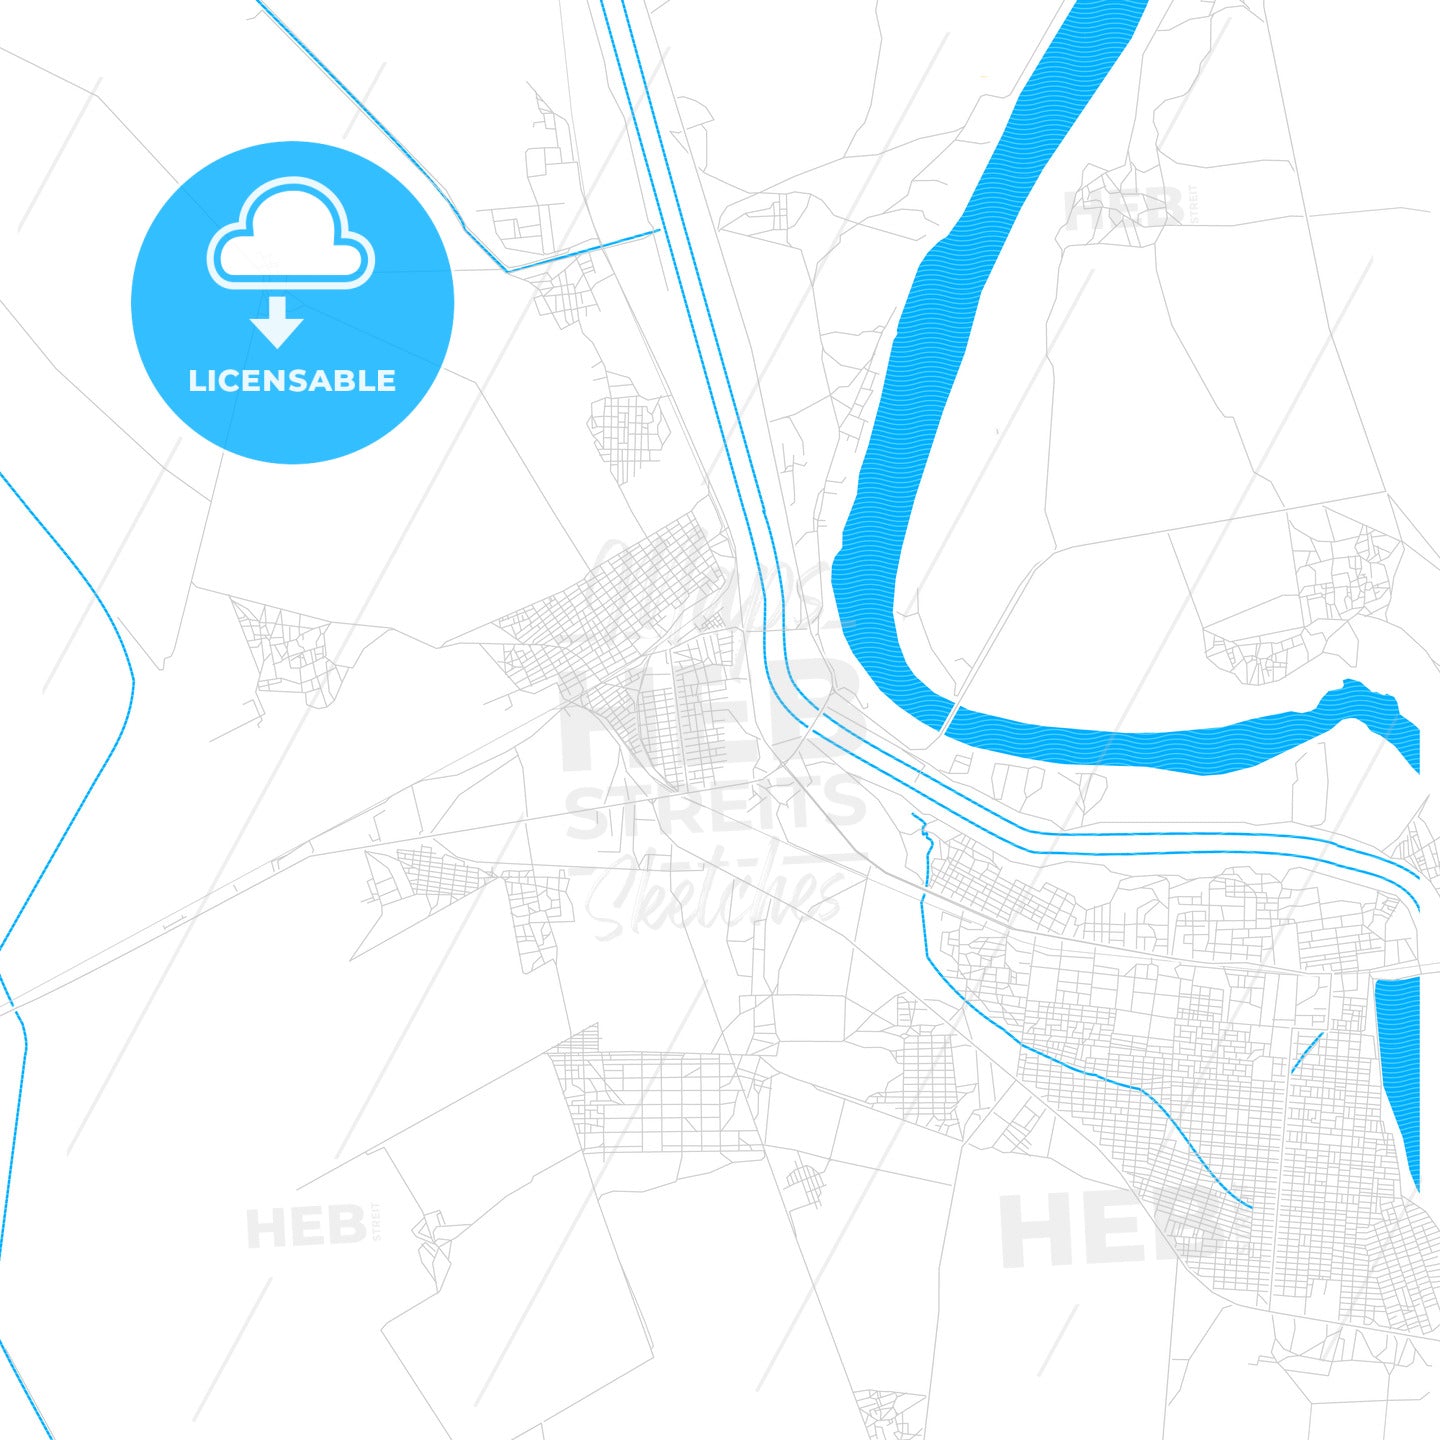 Sinnar, Sudan PDF vector map with water in focus